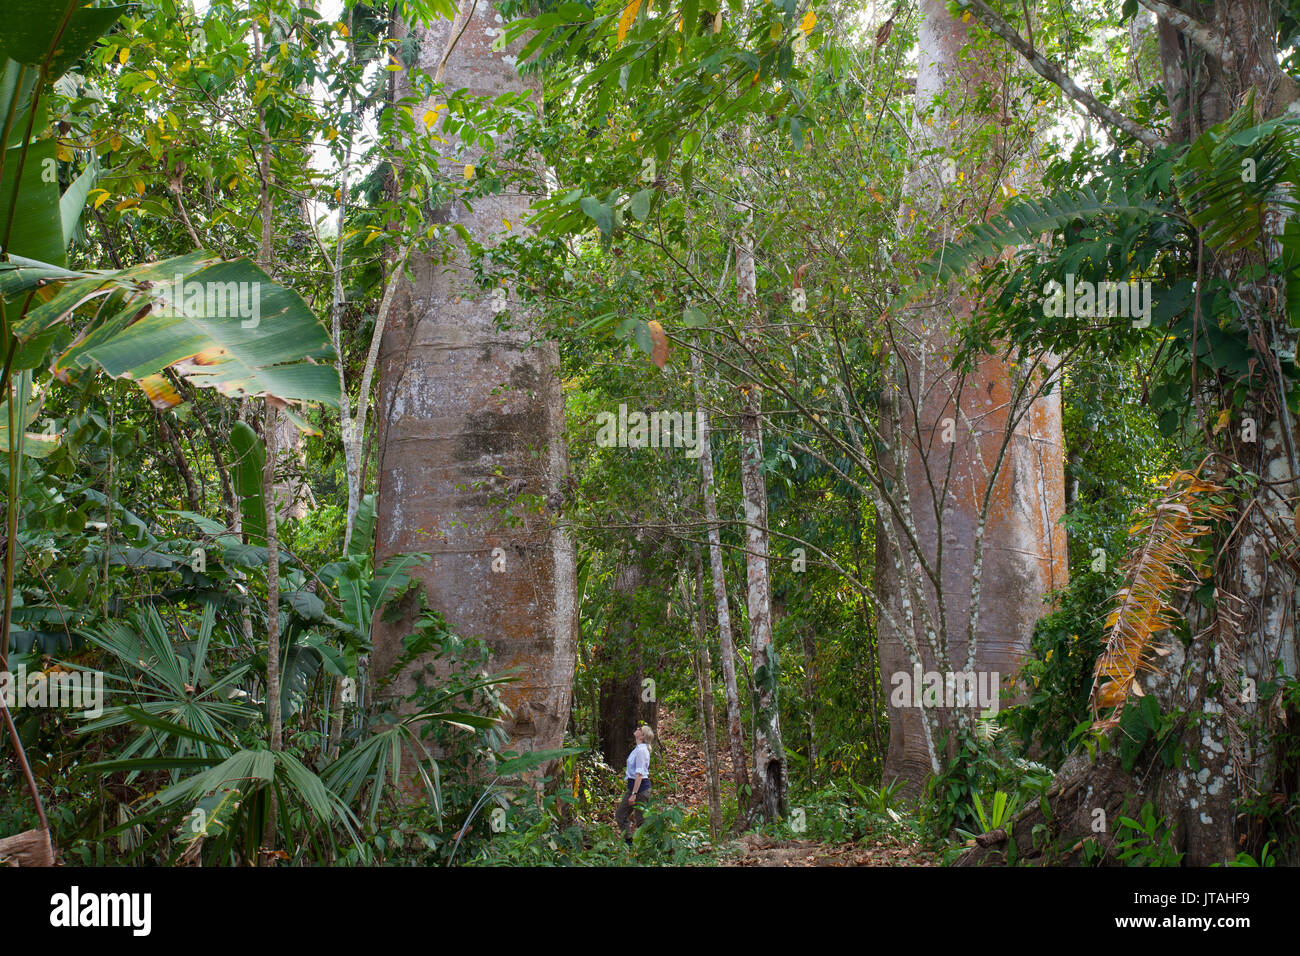 Kapok, Ceiba oder Seide Baumwolle Bäume (ceiba pentandra) mit Frau, die an der Basis, Darien, Panama. Stockfoto